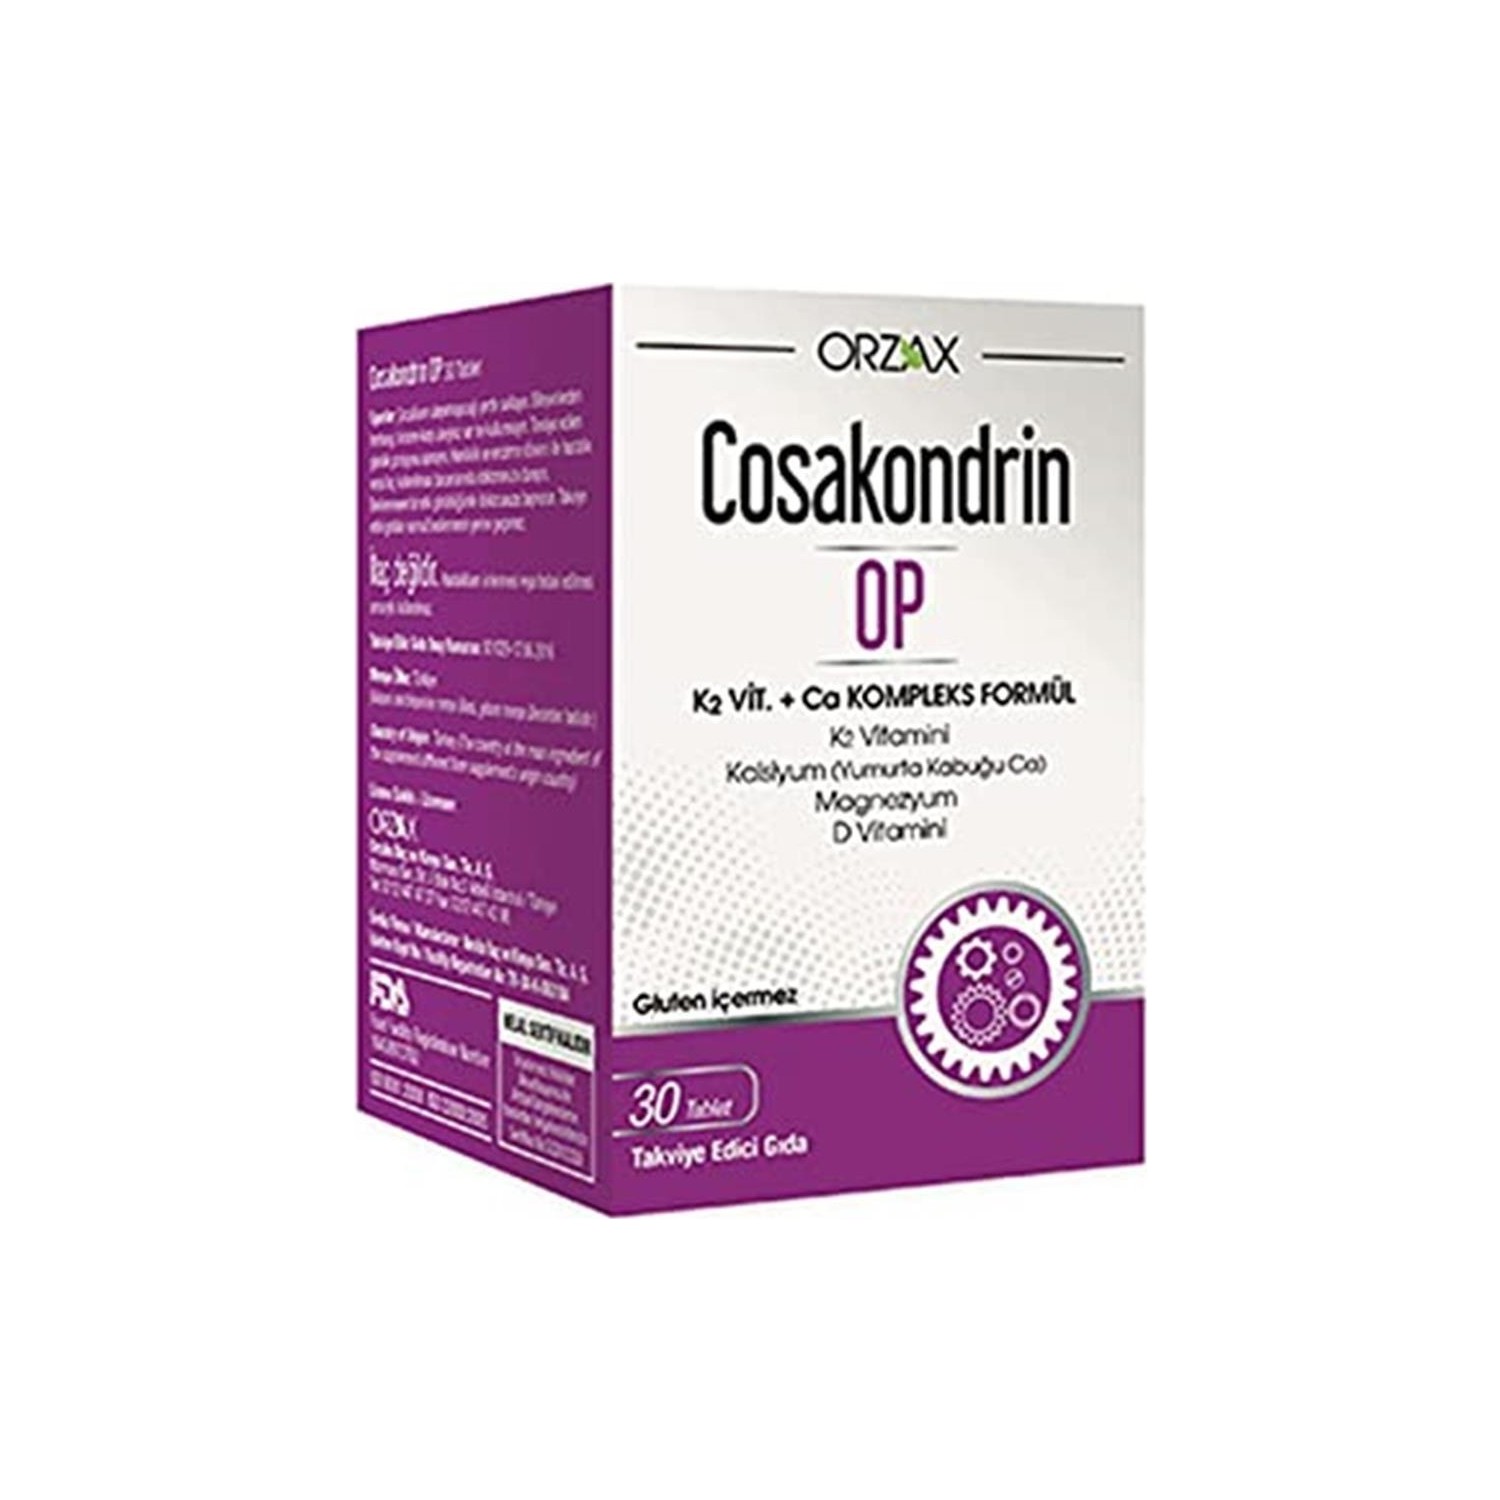 Пищевая добавка Orzax Cosakondrin Op, 30 таблеток